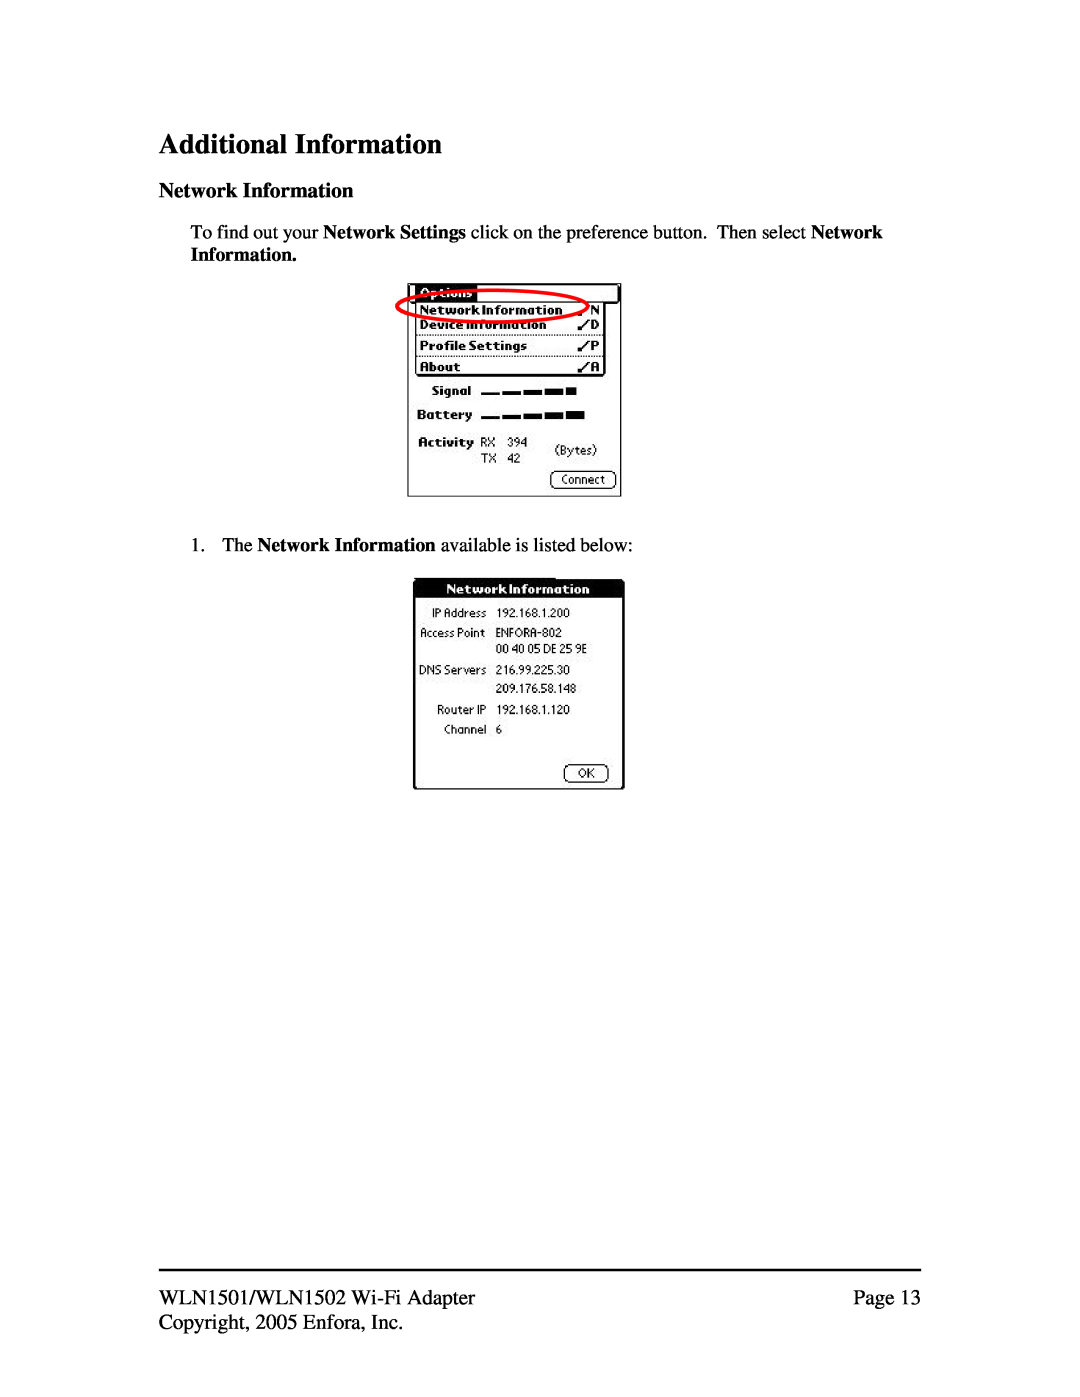 Enfora 600/650 manual Additional Information, Network Information 